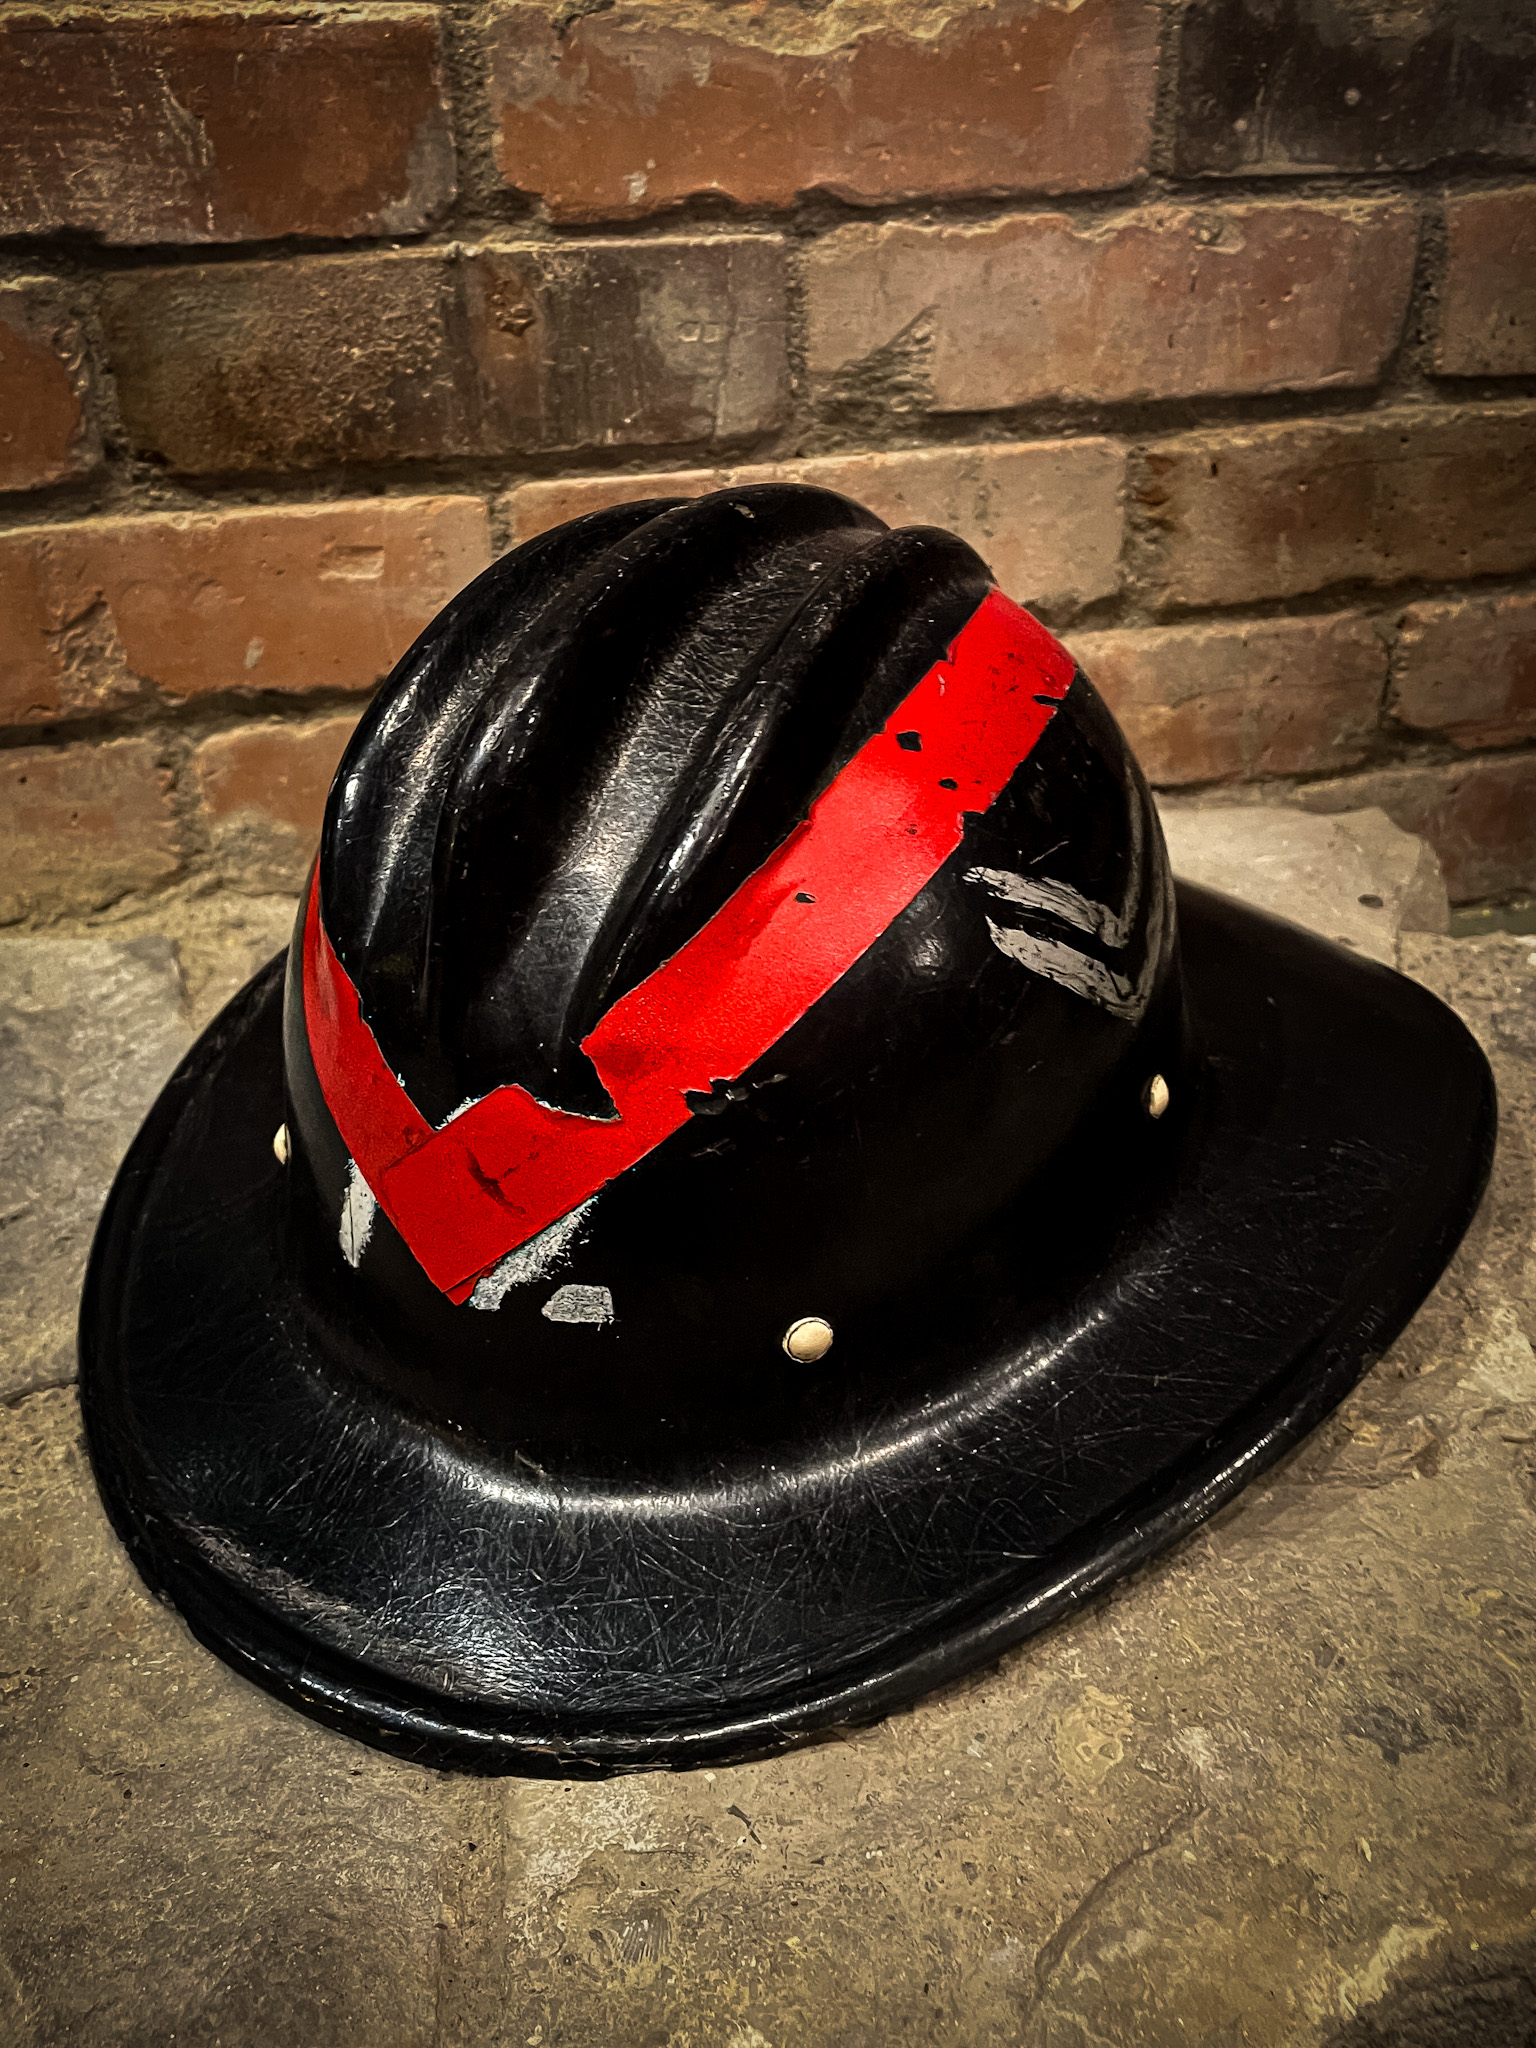 Fireman's Helmet Ca 1935 325.00 CND